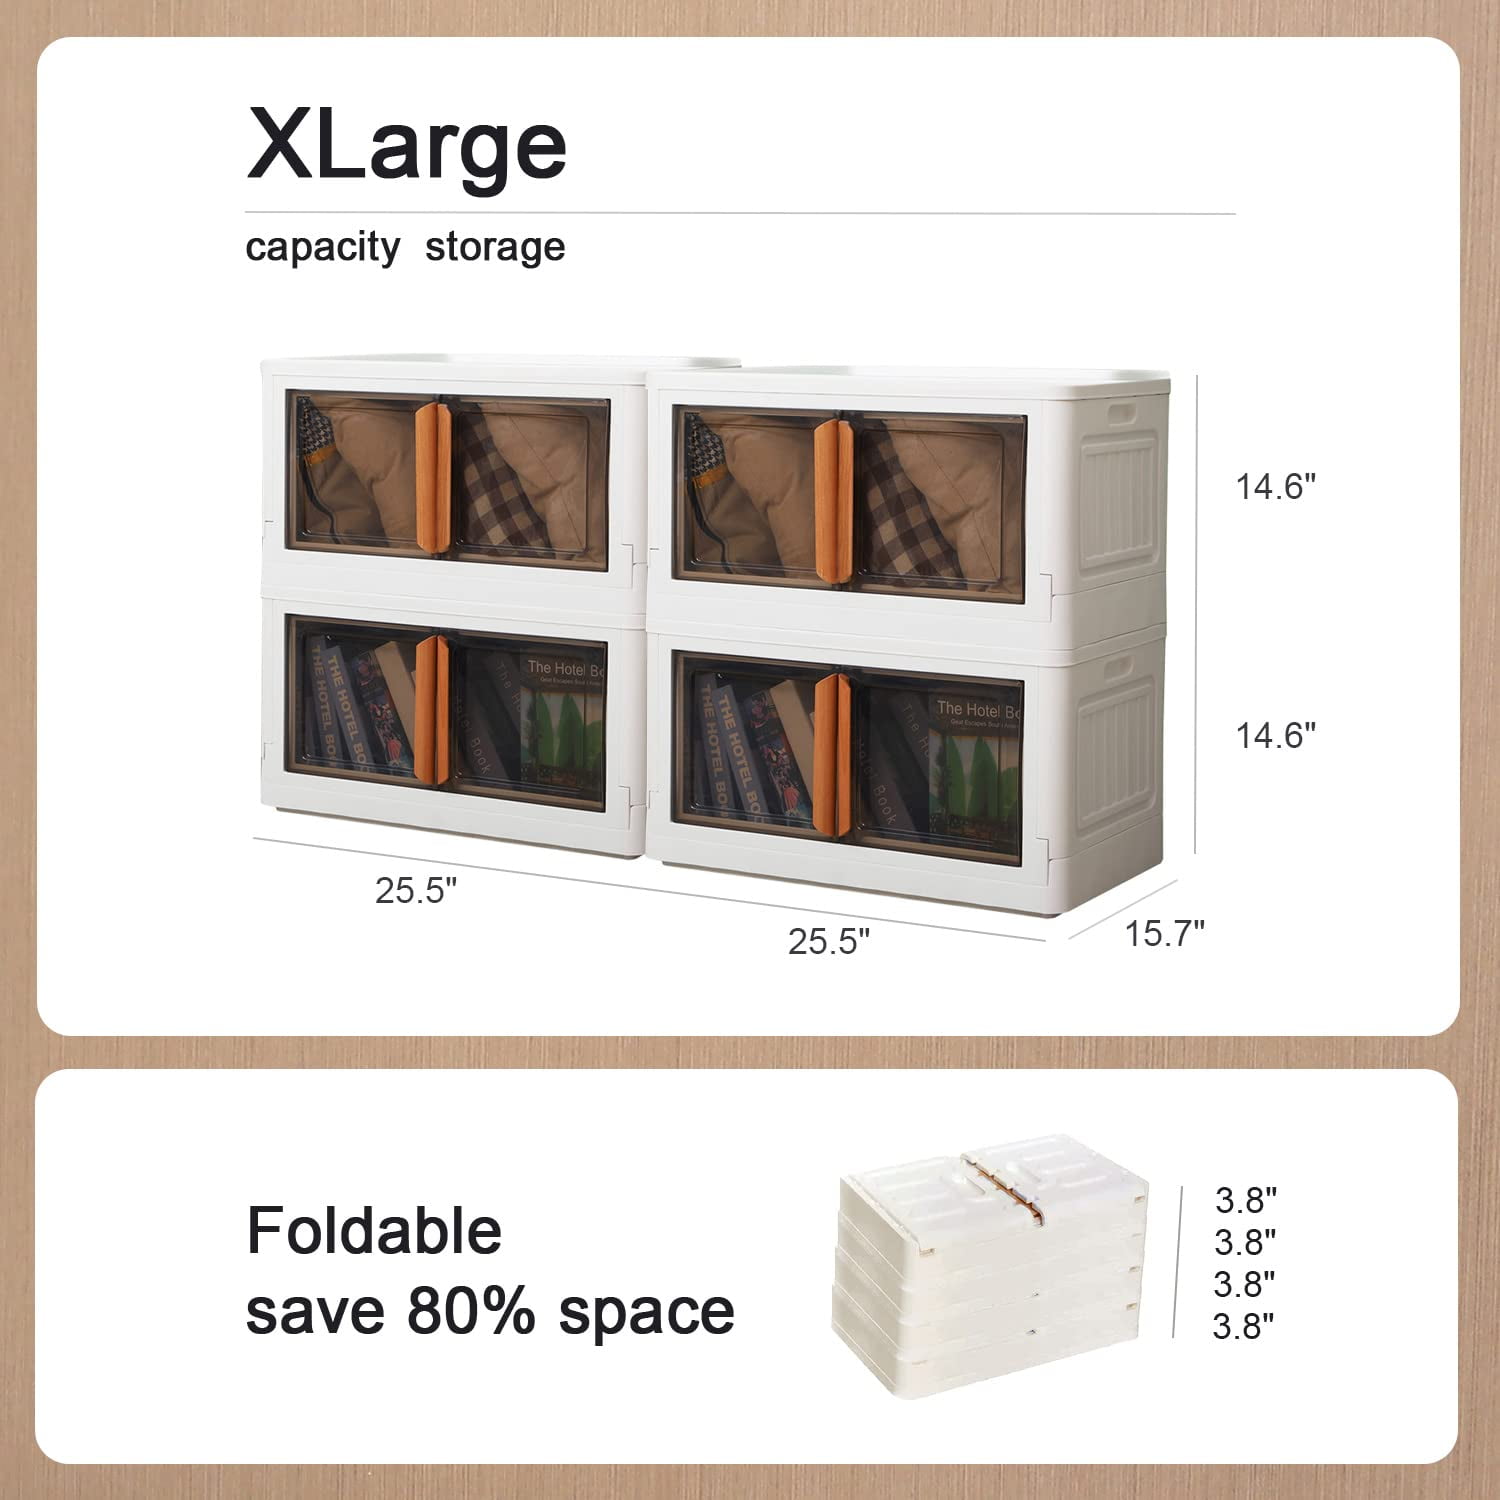 Karramlili Storage Bins with Lids - 11gal Stackable Plastic Storage Bins with Front Doors, 2 Packs Folding Storage Box Collapsible Stora, Tan